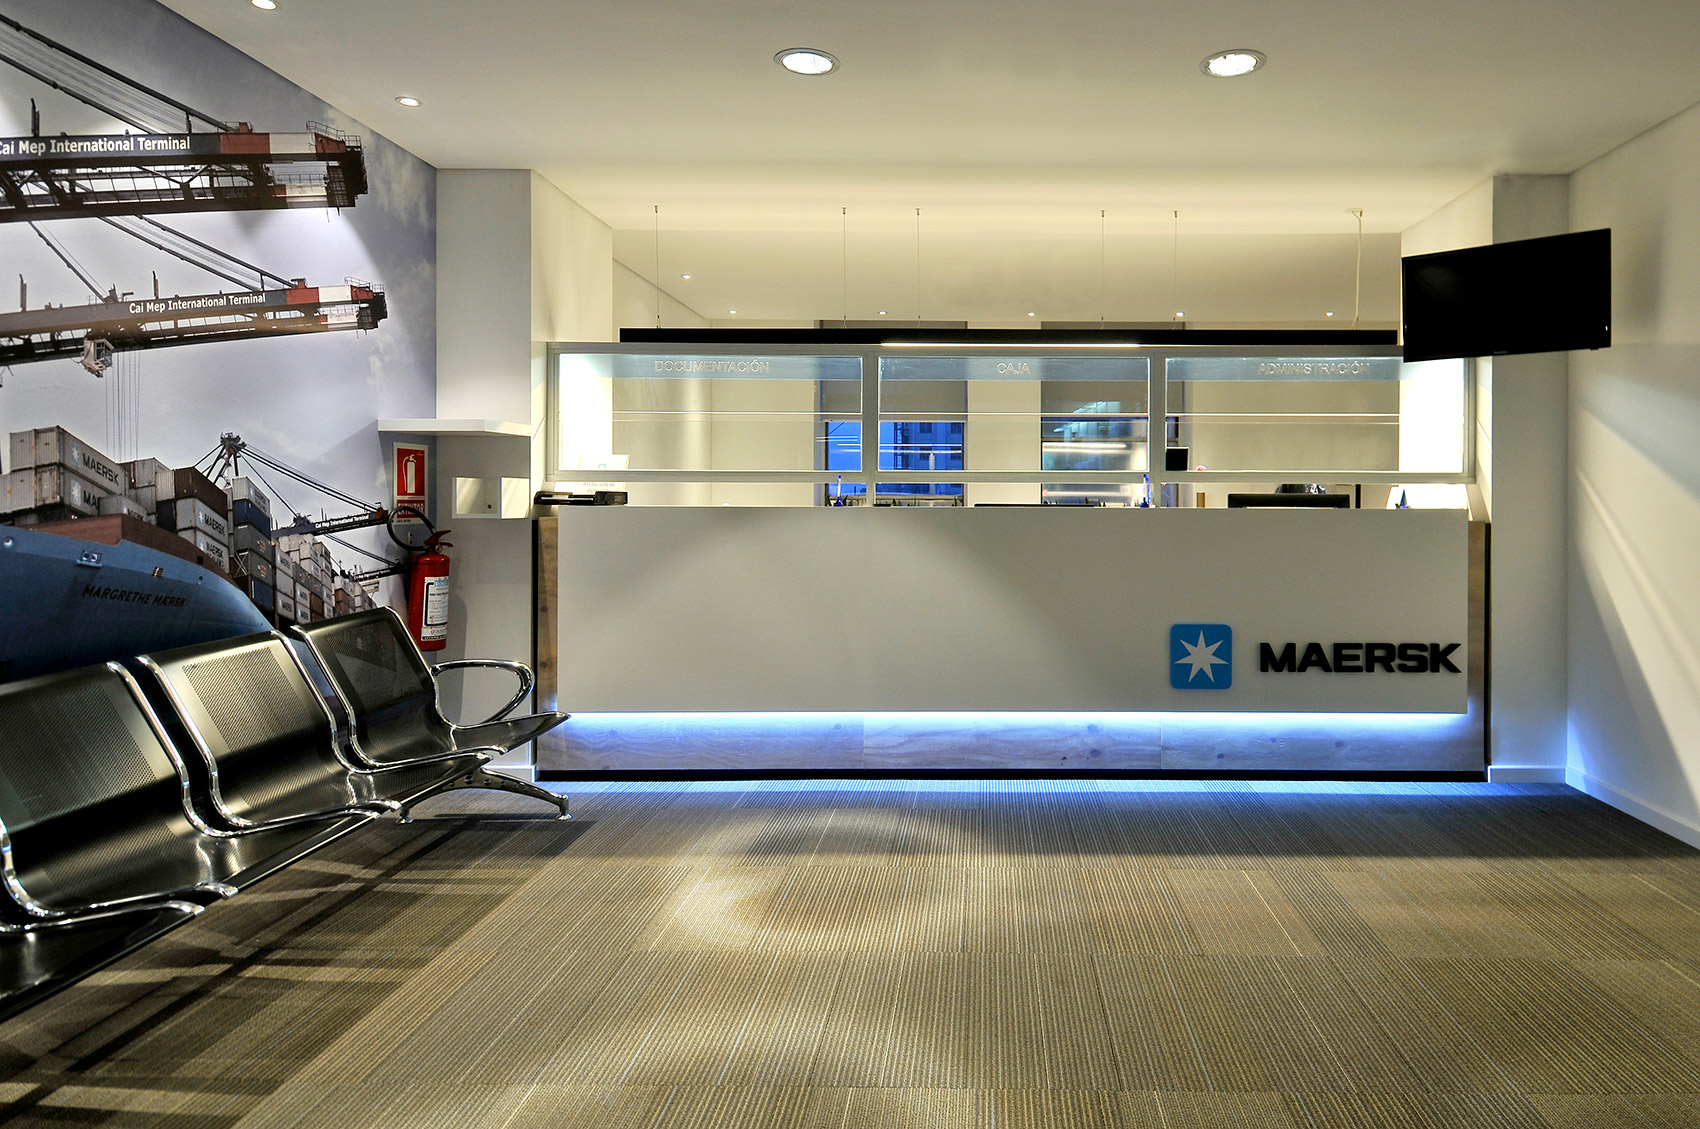 Oficinas Maersk Uruguay